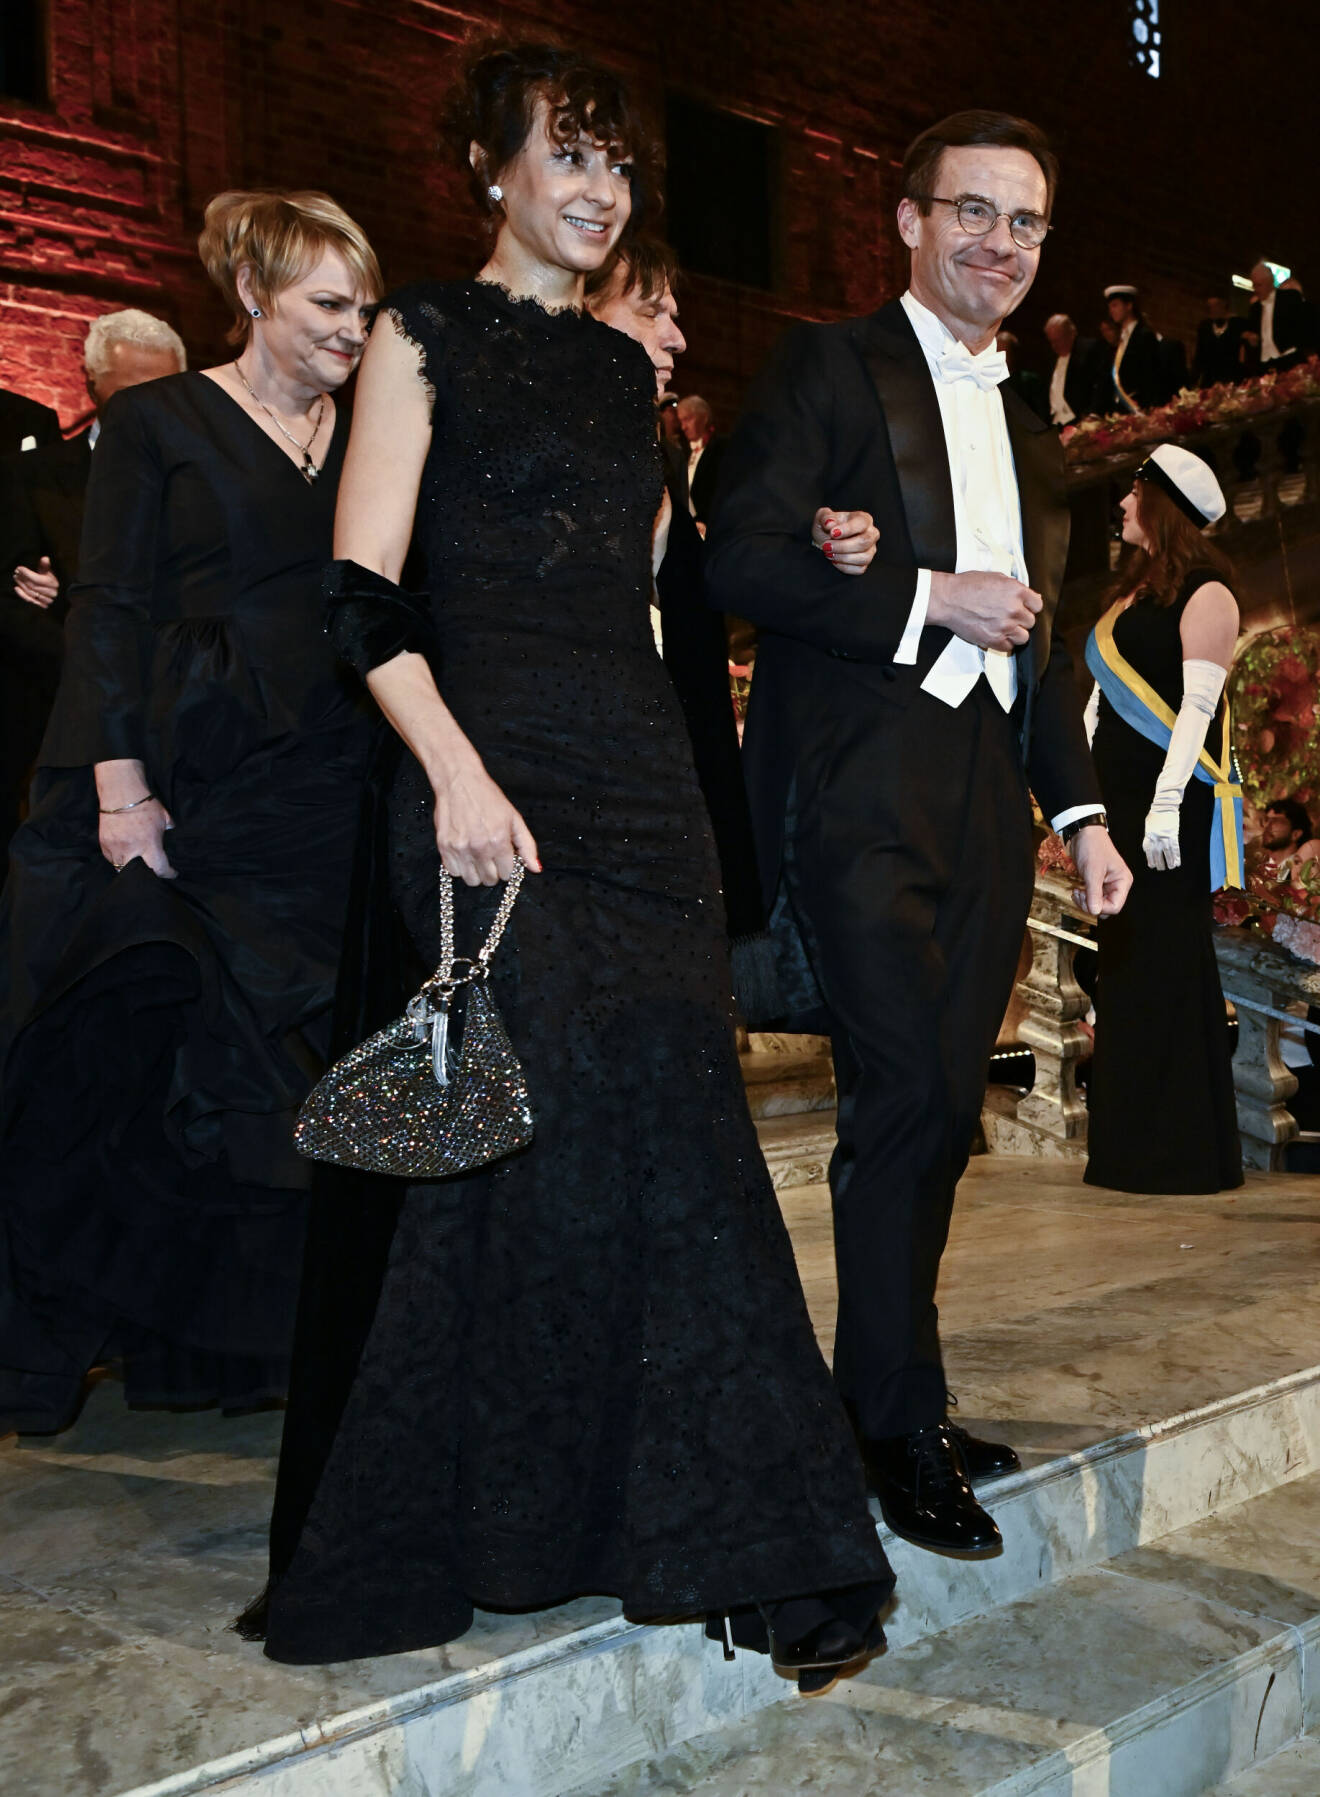 Emanuelle Charpentier, Nobelpristagare i kemi 2020, och statsminister Ulf Kristersson